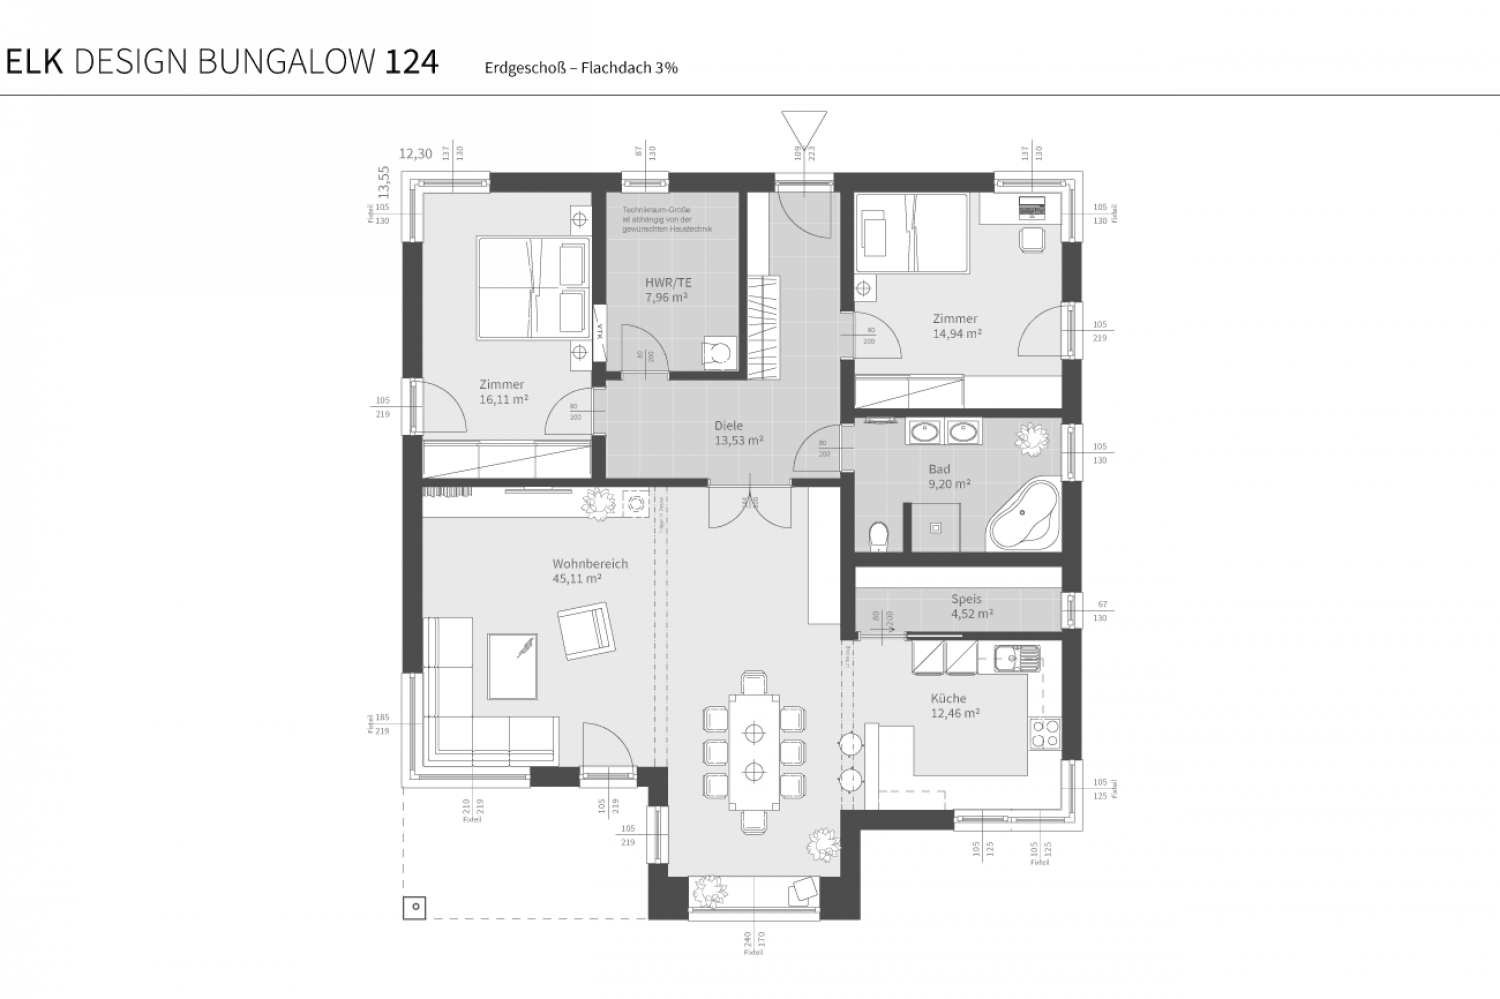 grundriss-elk-fertighaus-elk-design-bungalow-124-EG-FD